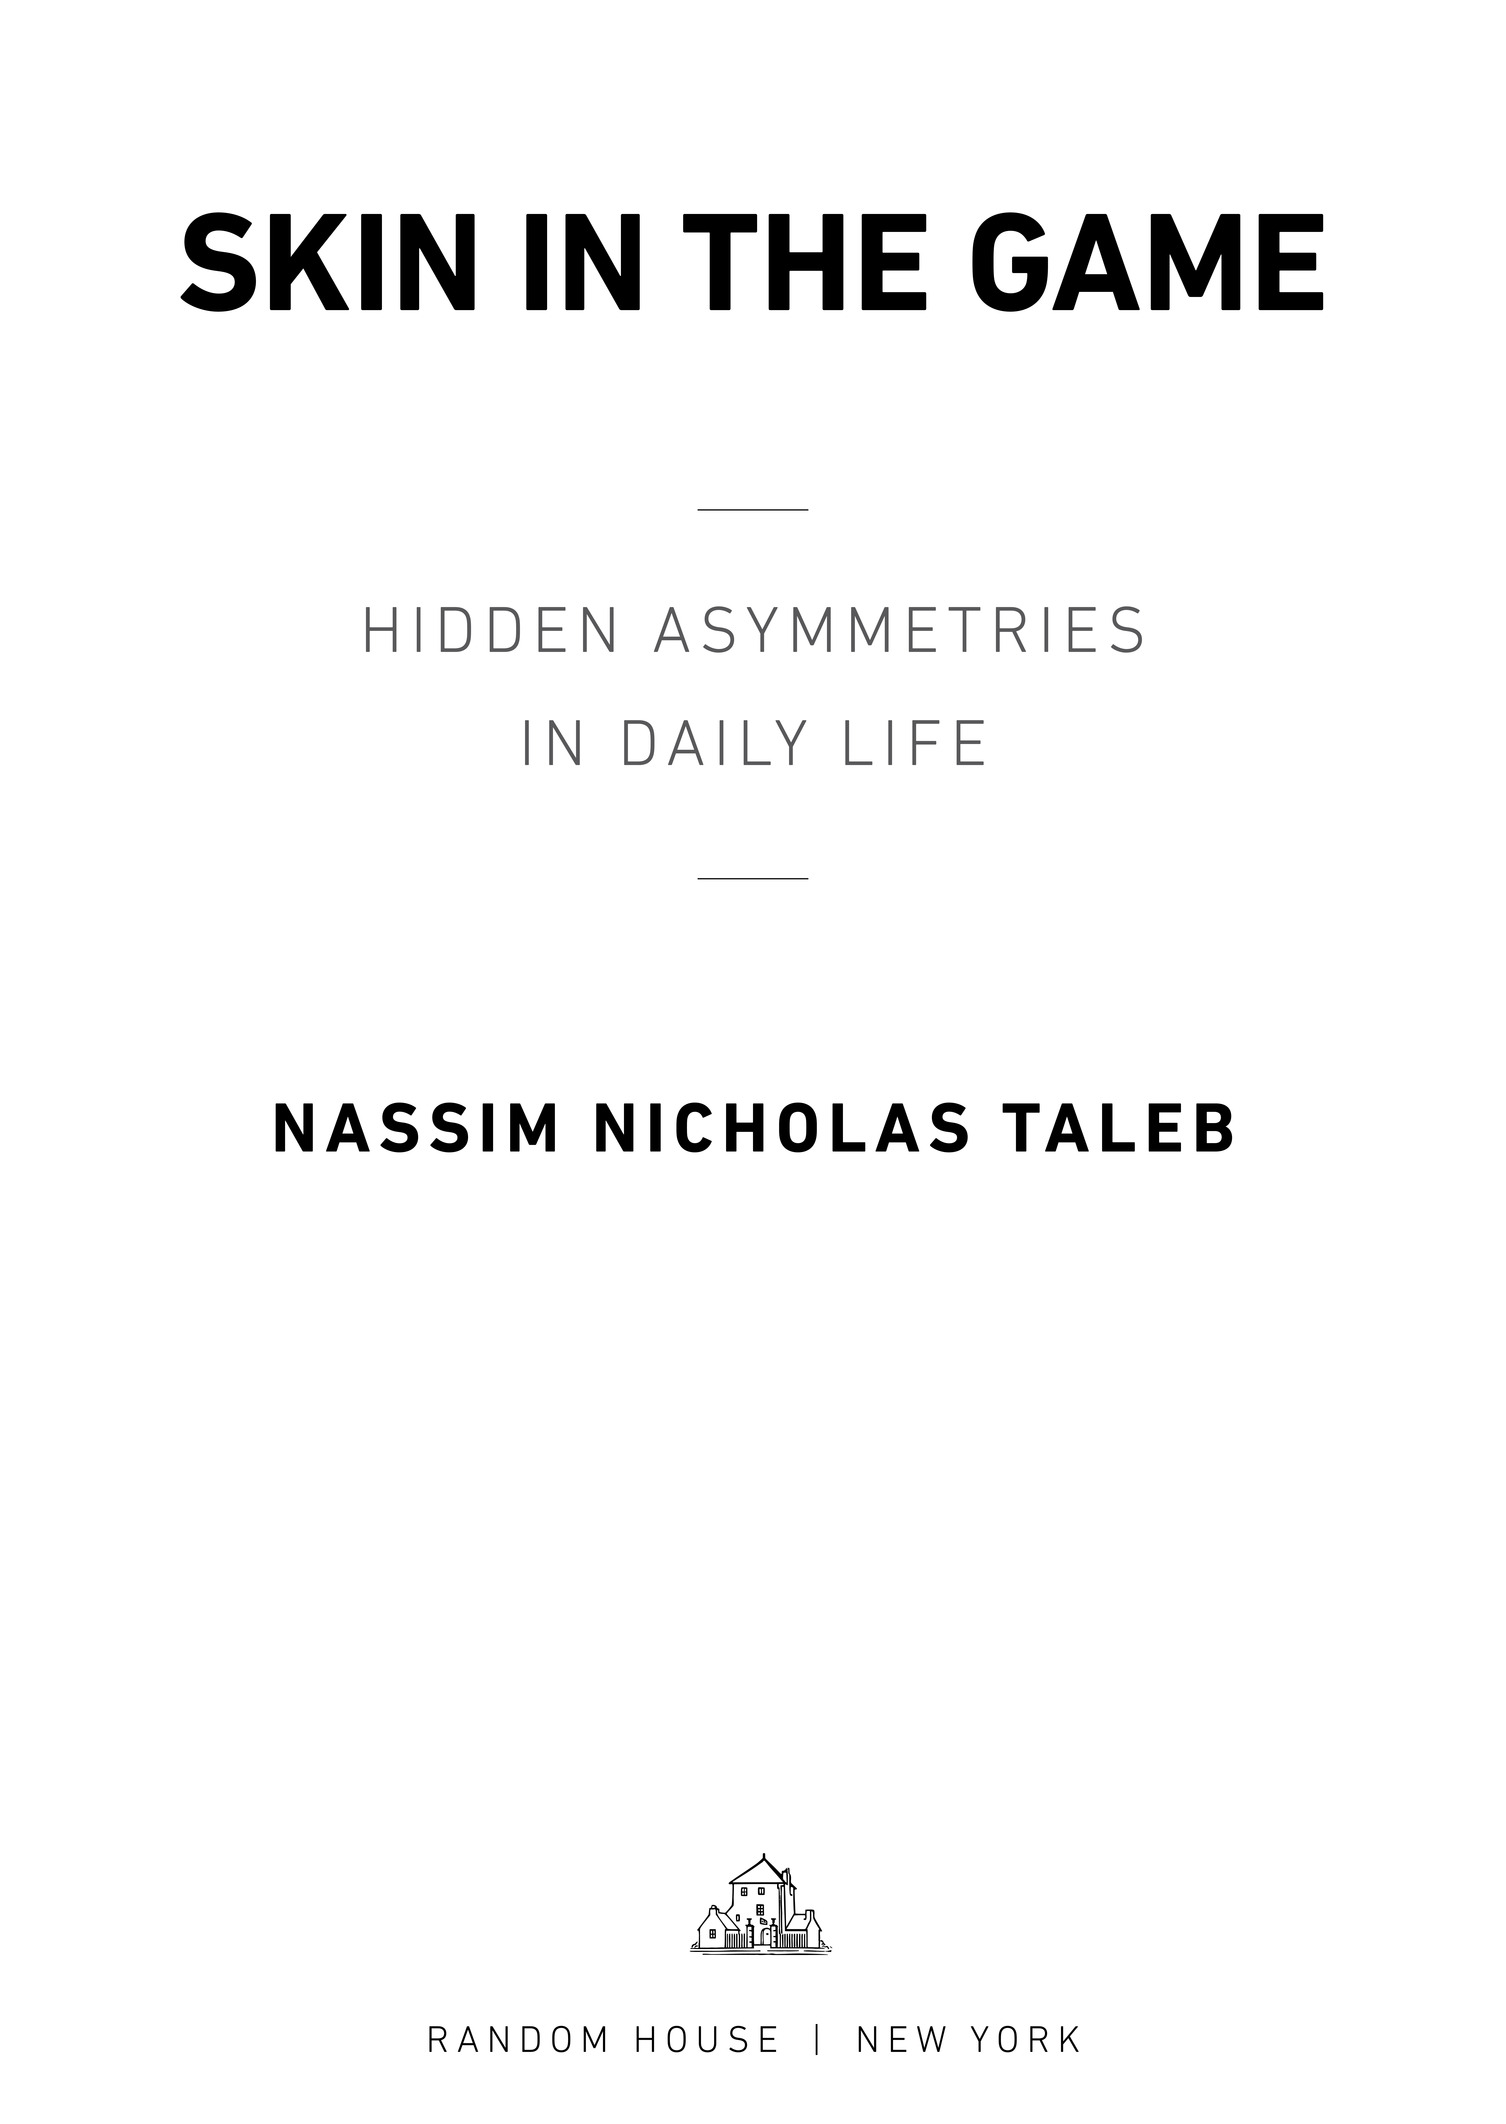 Book Title, Skin in the Game, Subtitle, Hidden Asymmetries in Daily Life, Author, Nassim Nicholas Taleb, Imprint, Random House